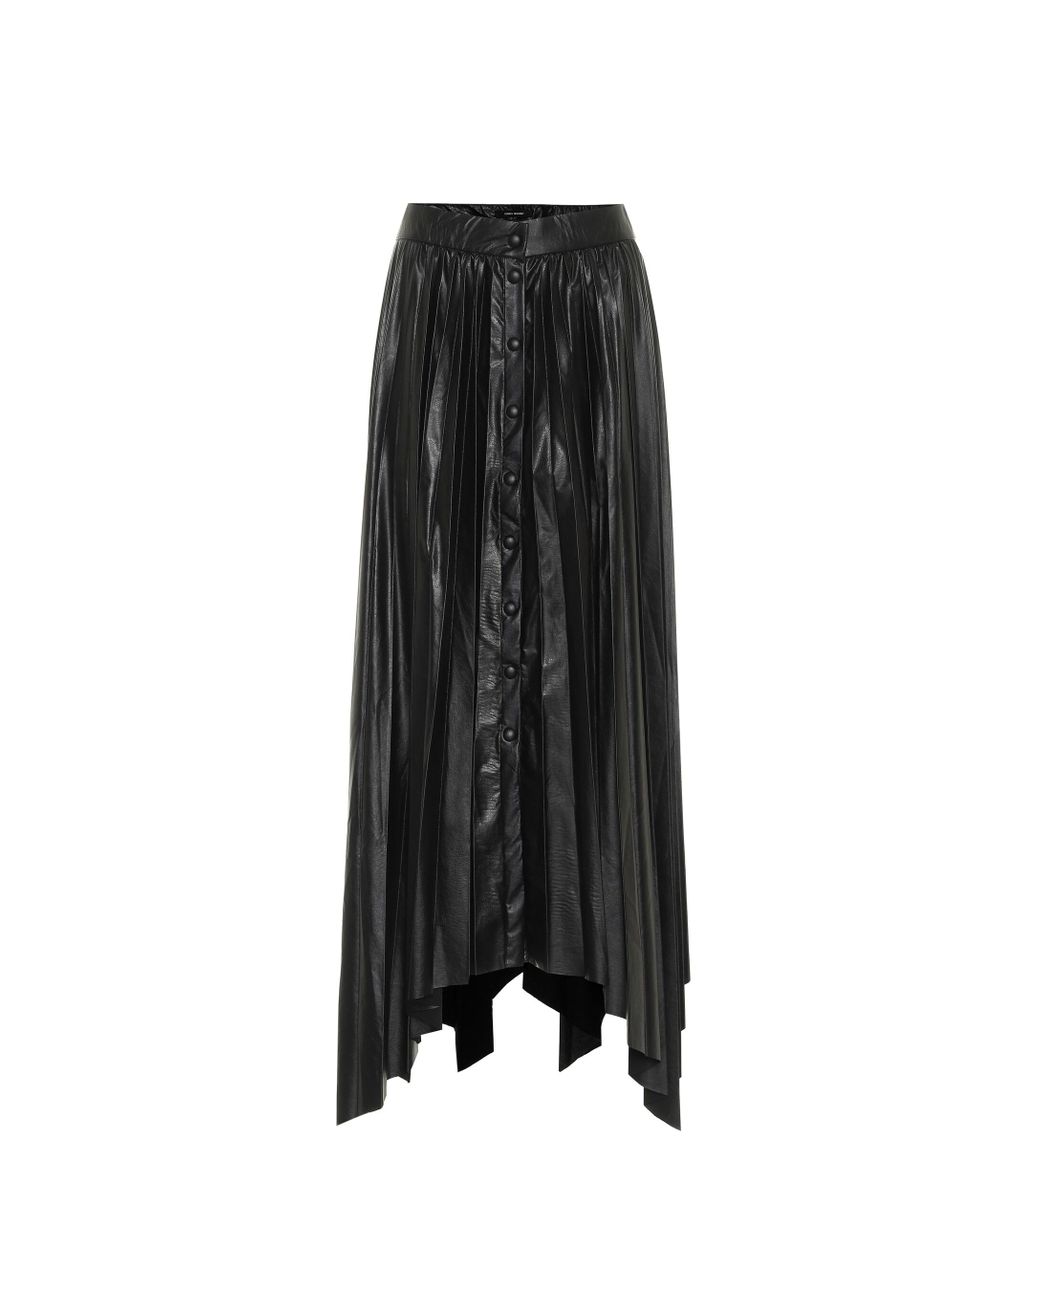 Isabel Marant Davies Pleated Midi Skirt in Black - Lyst